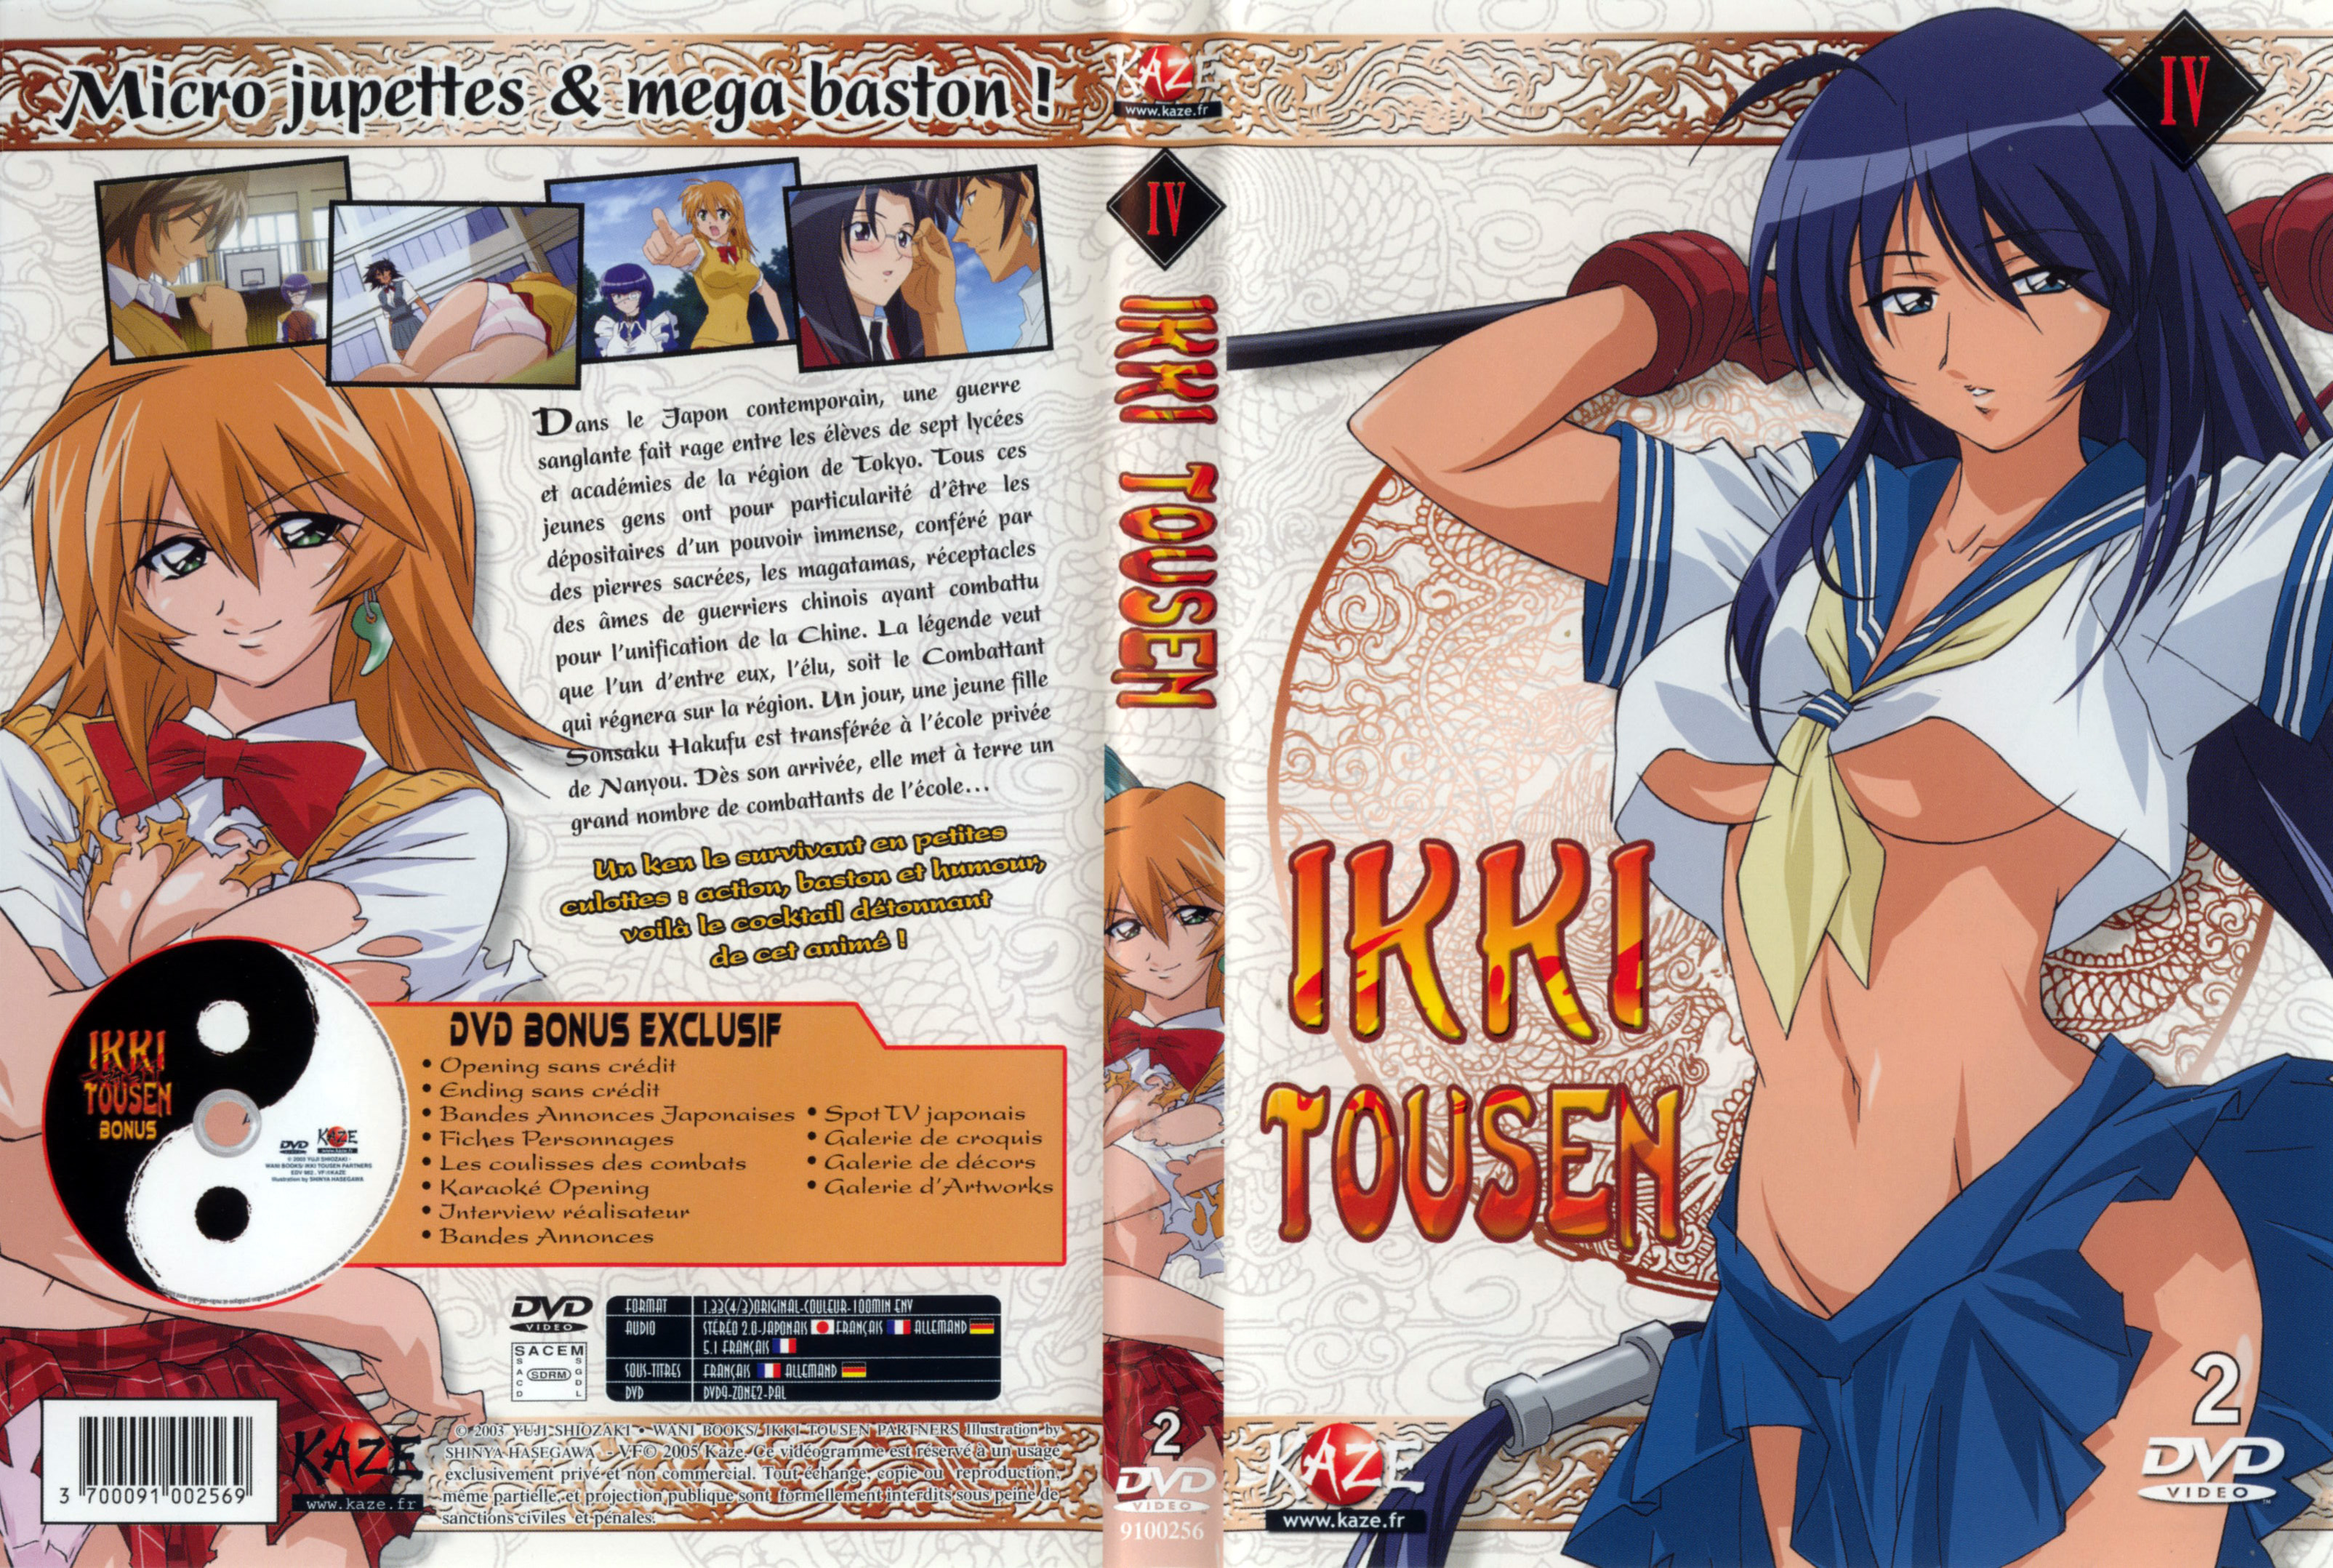 Jaquette DVD Ikki Tousen Saison 1 vol 4